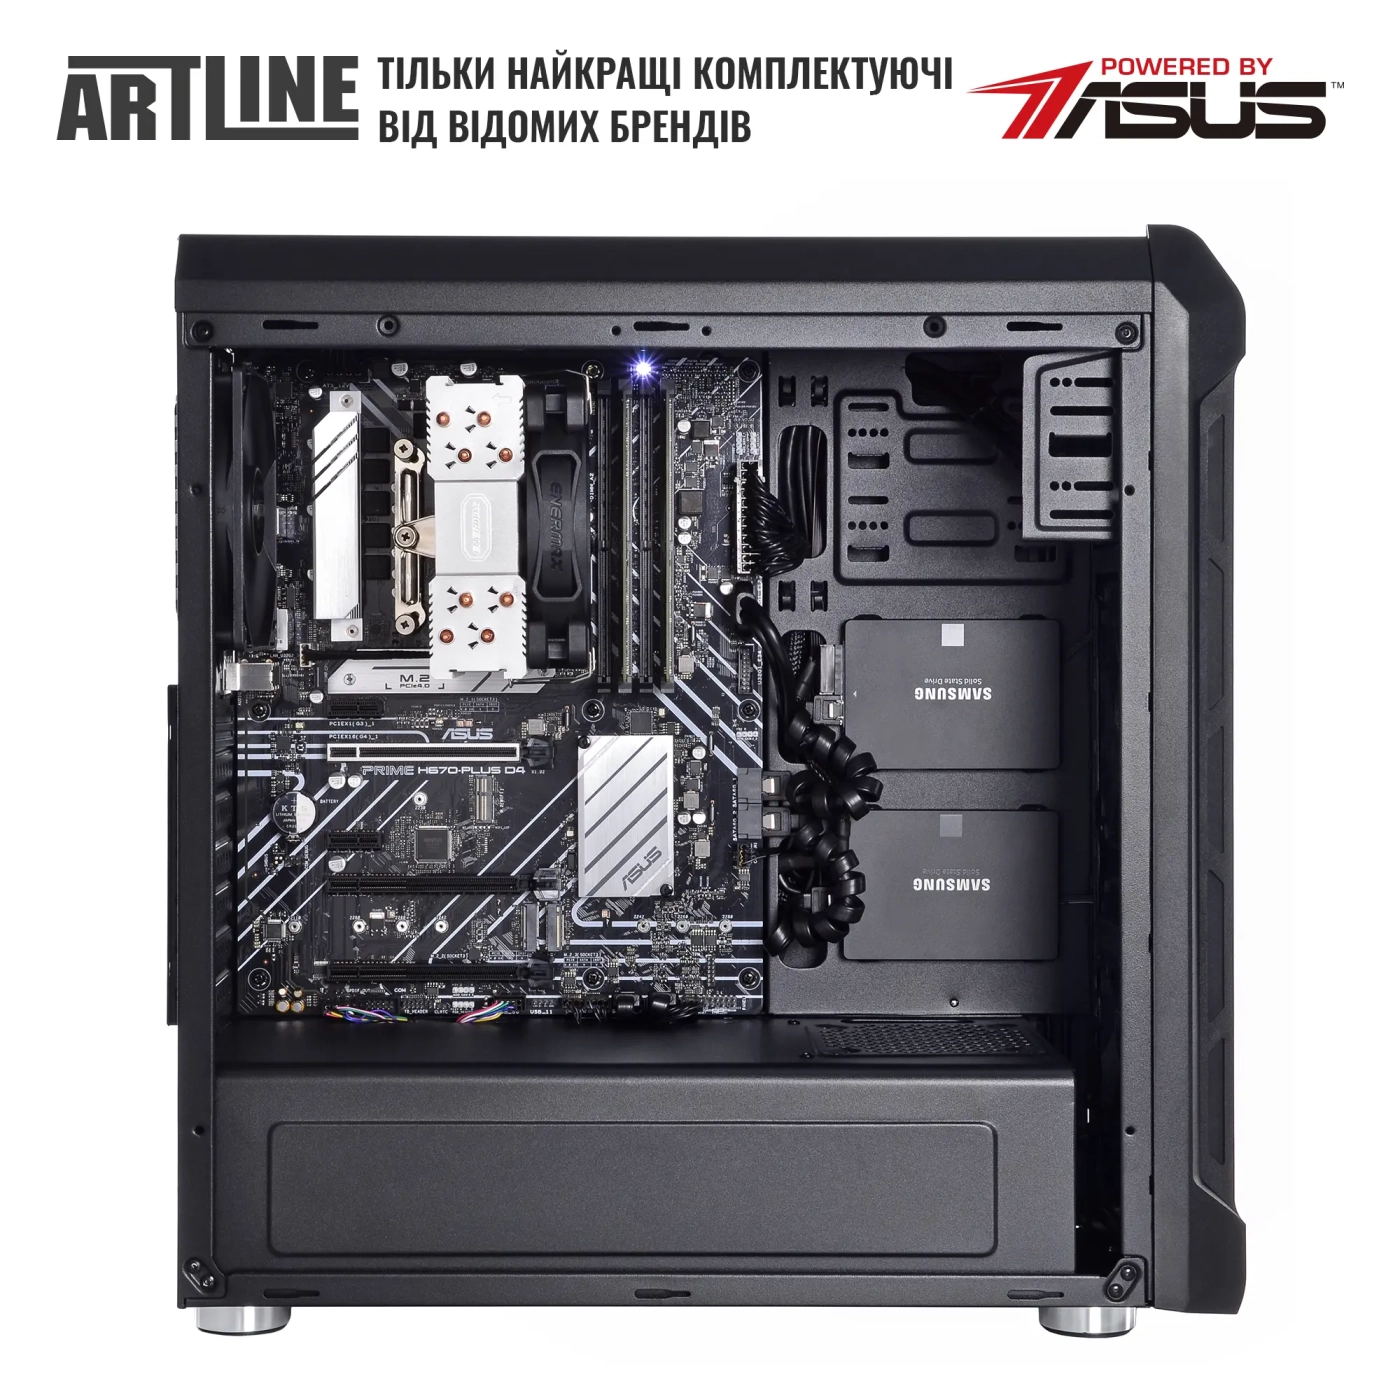 Купити Сервер ARTLINE Business T25 (T25v39) - фото 4